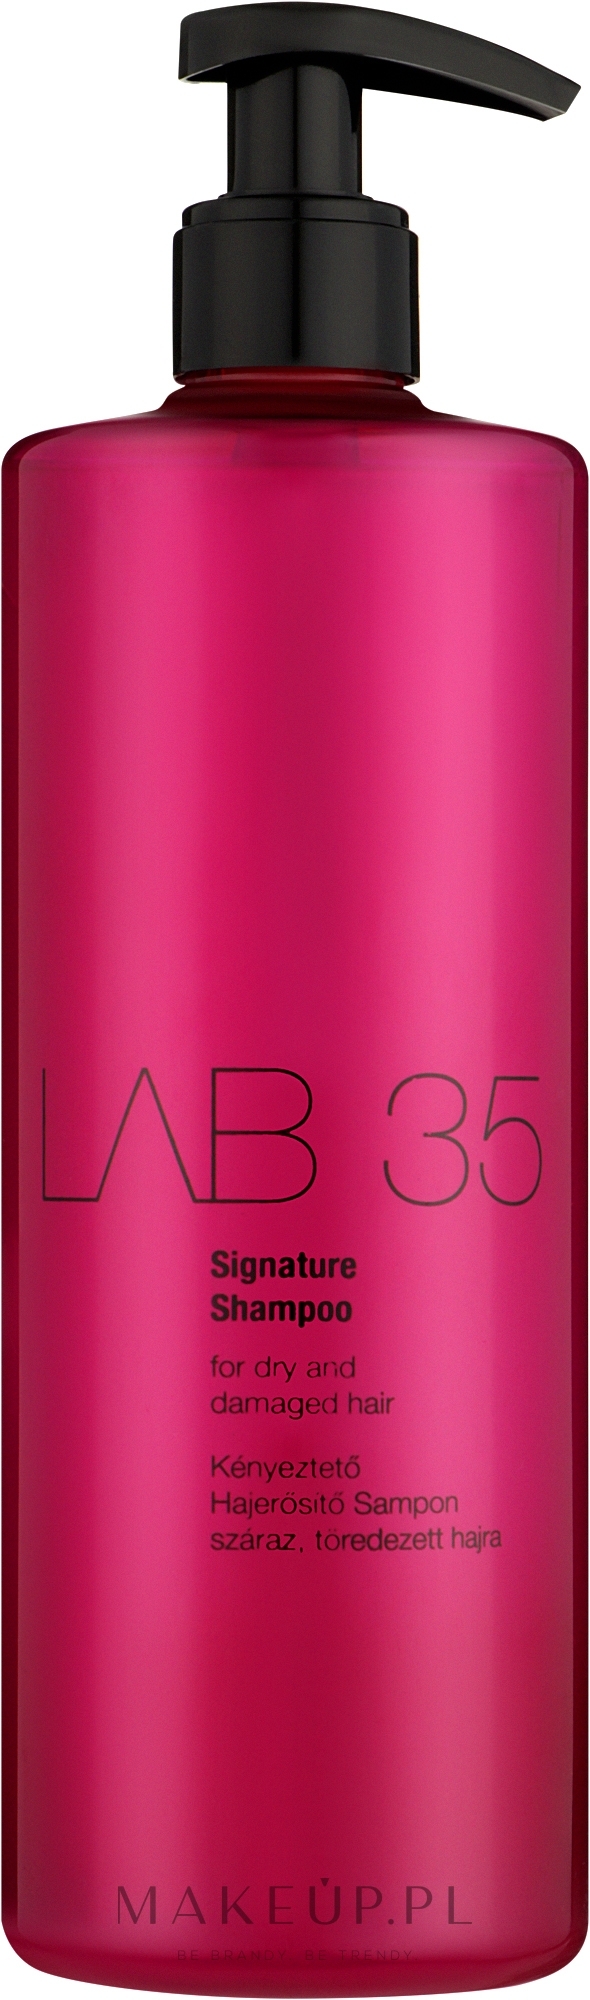 lallos lab35 włosy farbowane szampon